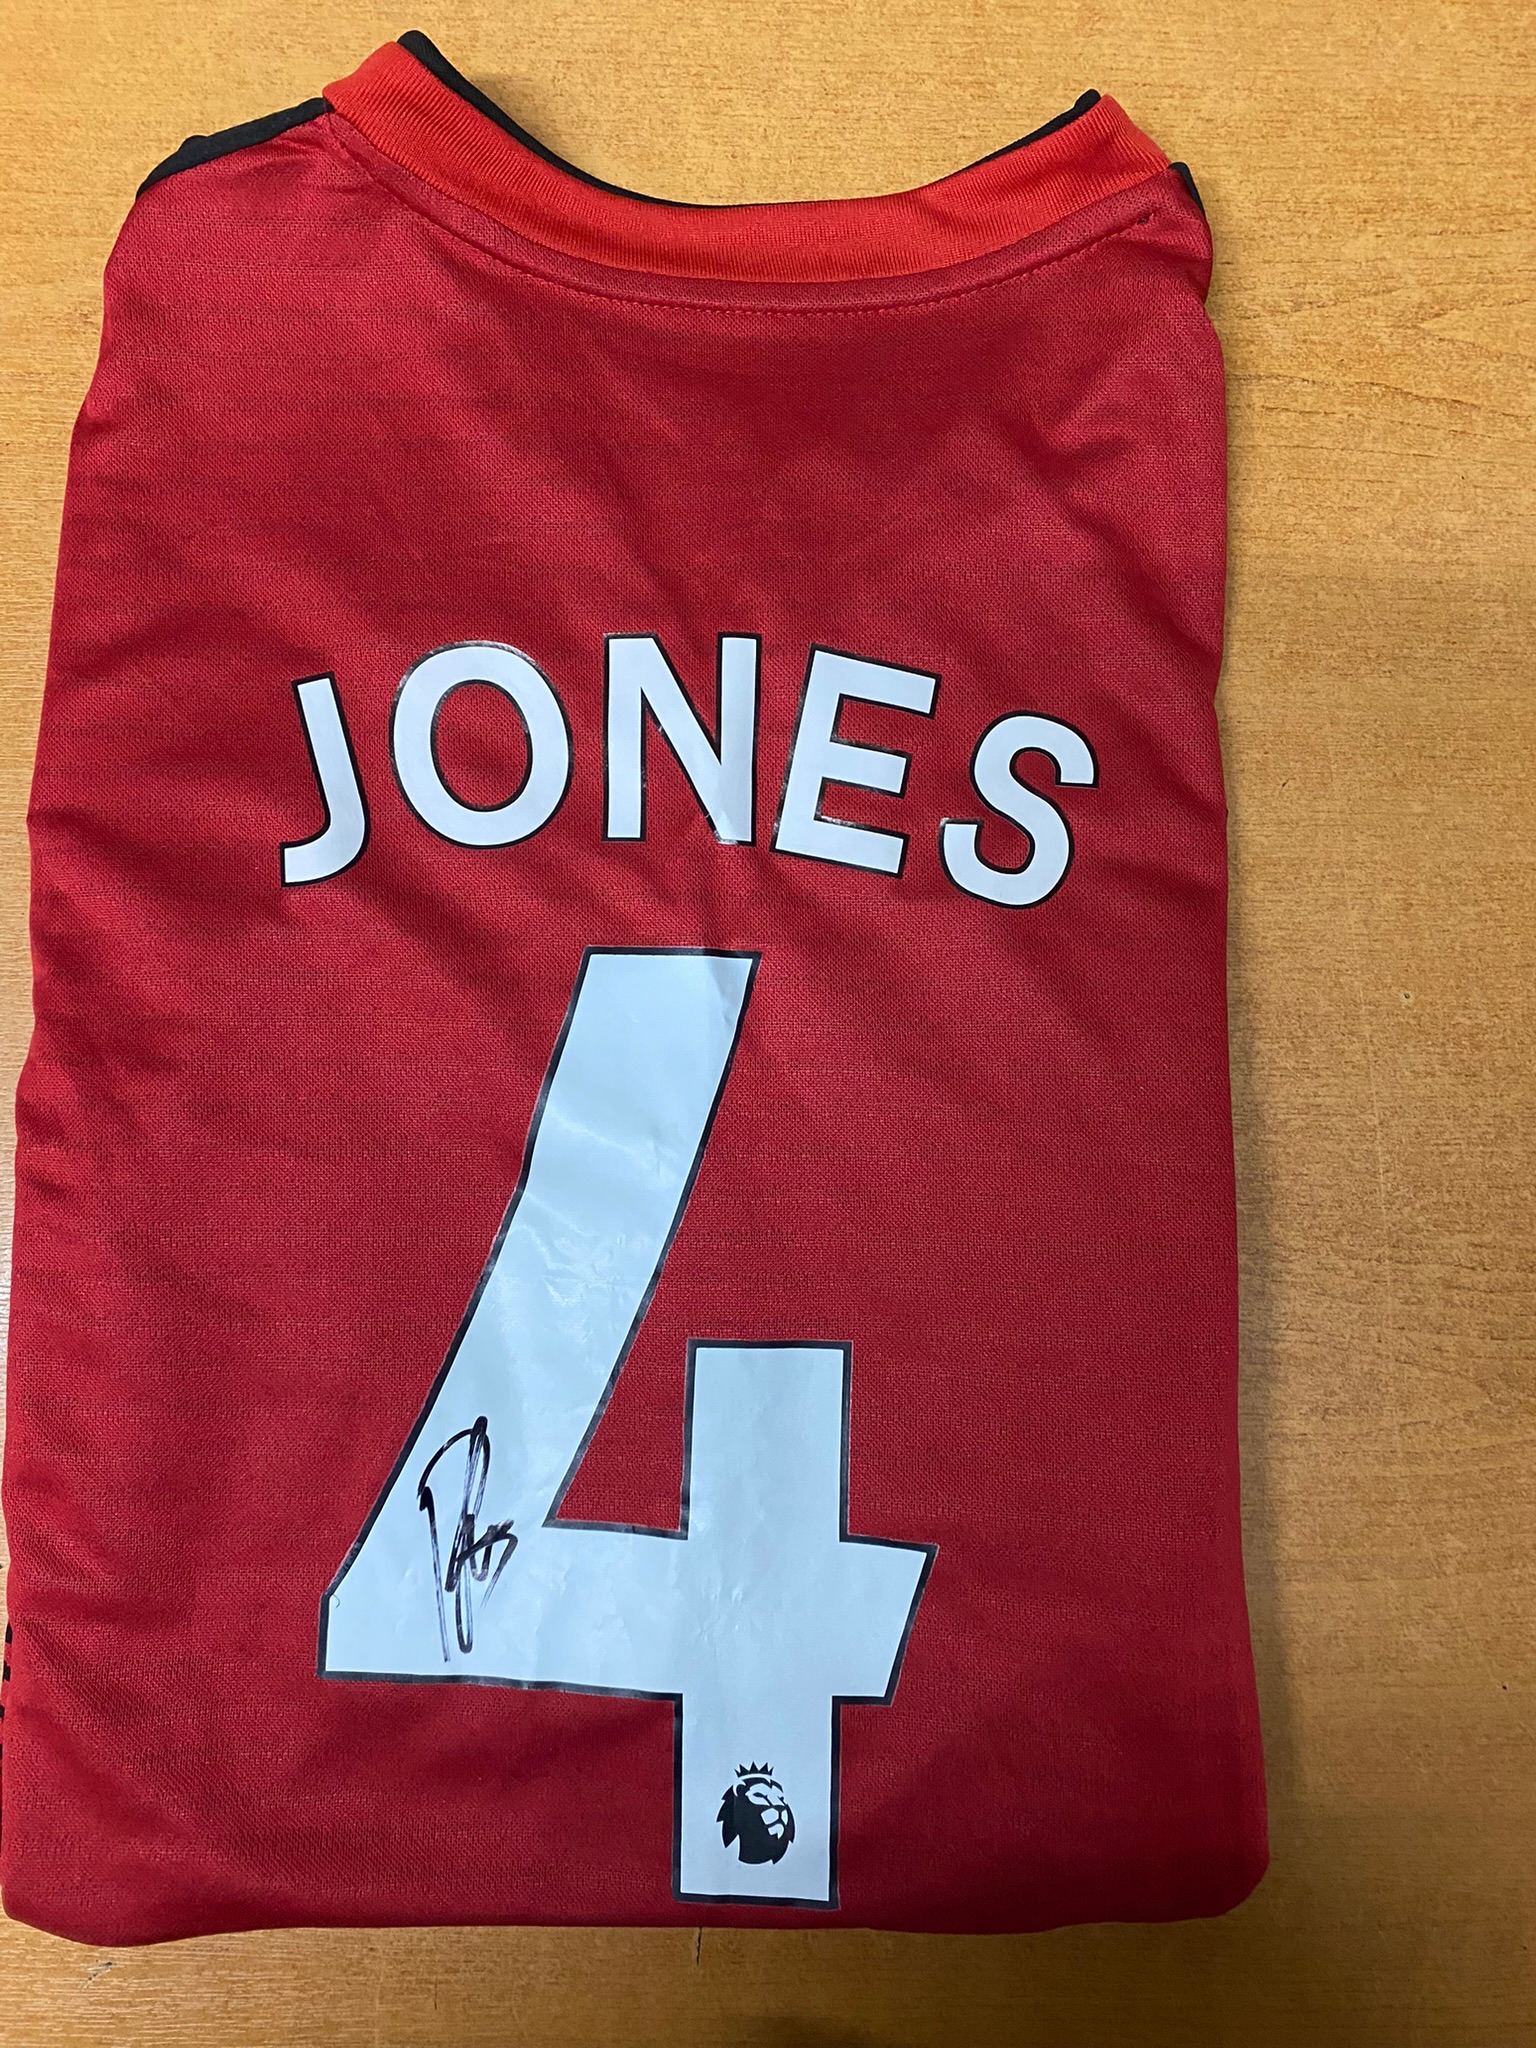 Manchester United Signed Phil Jones Shirt - Image 2 of 3